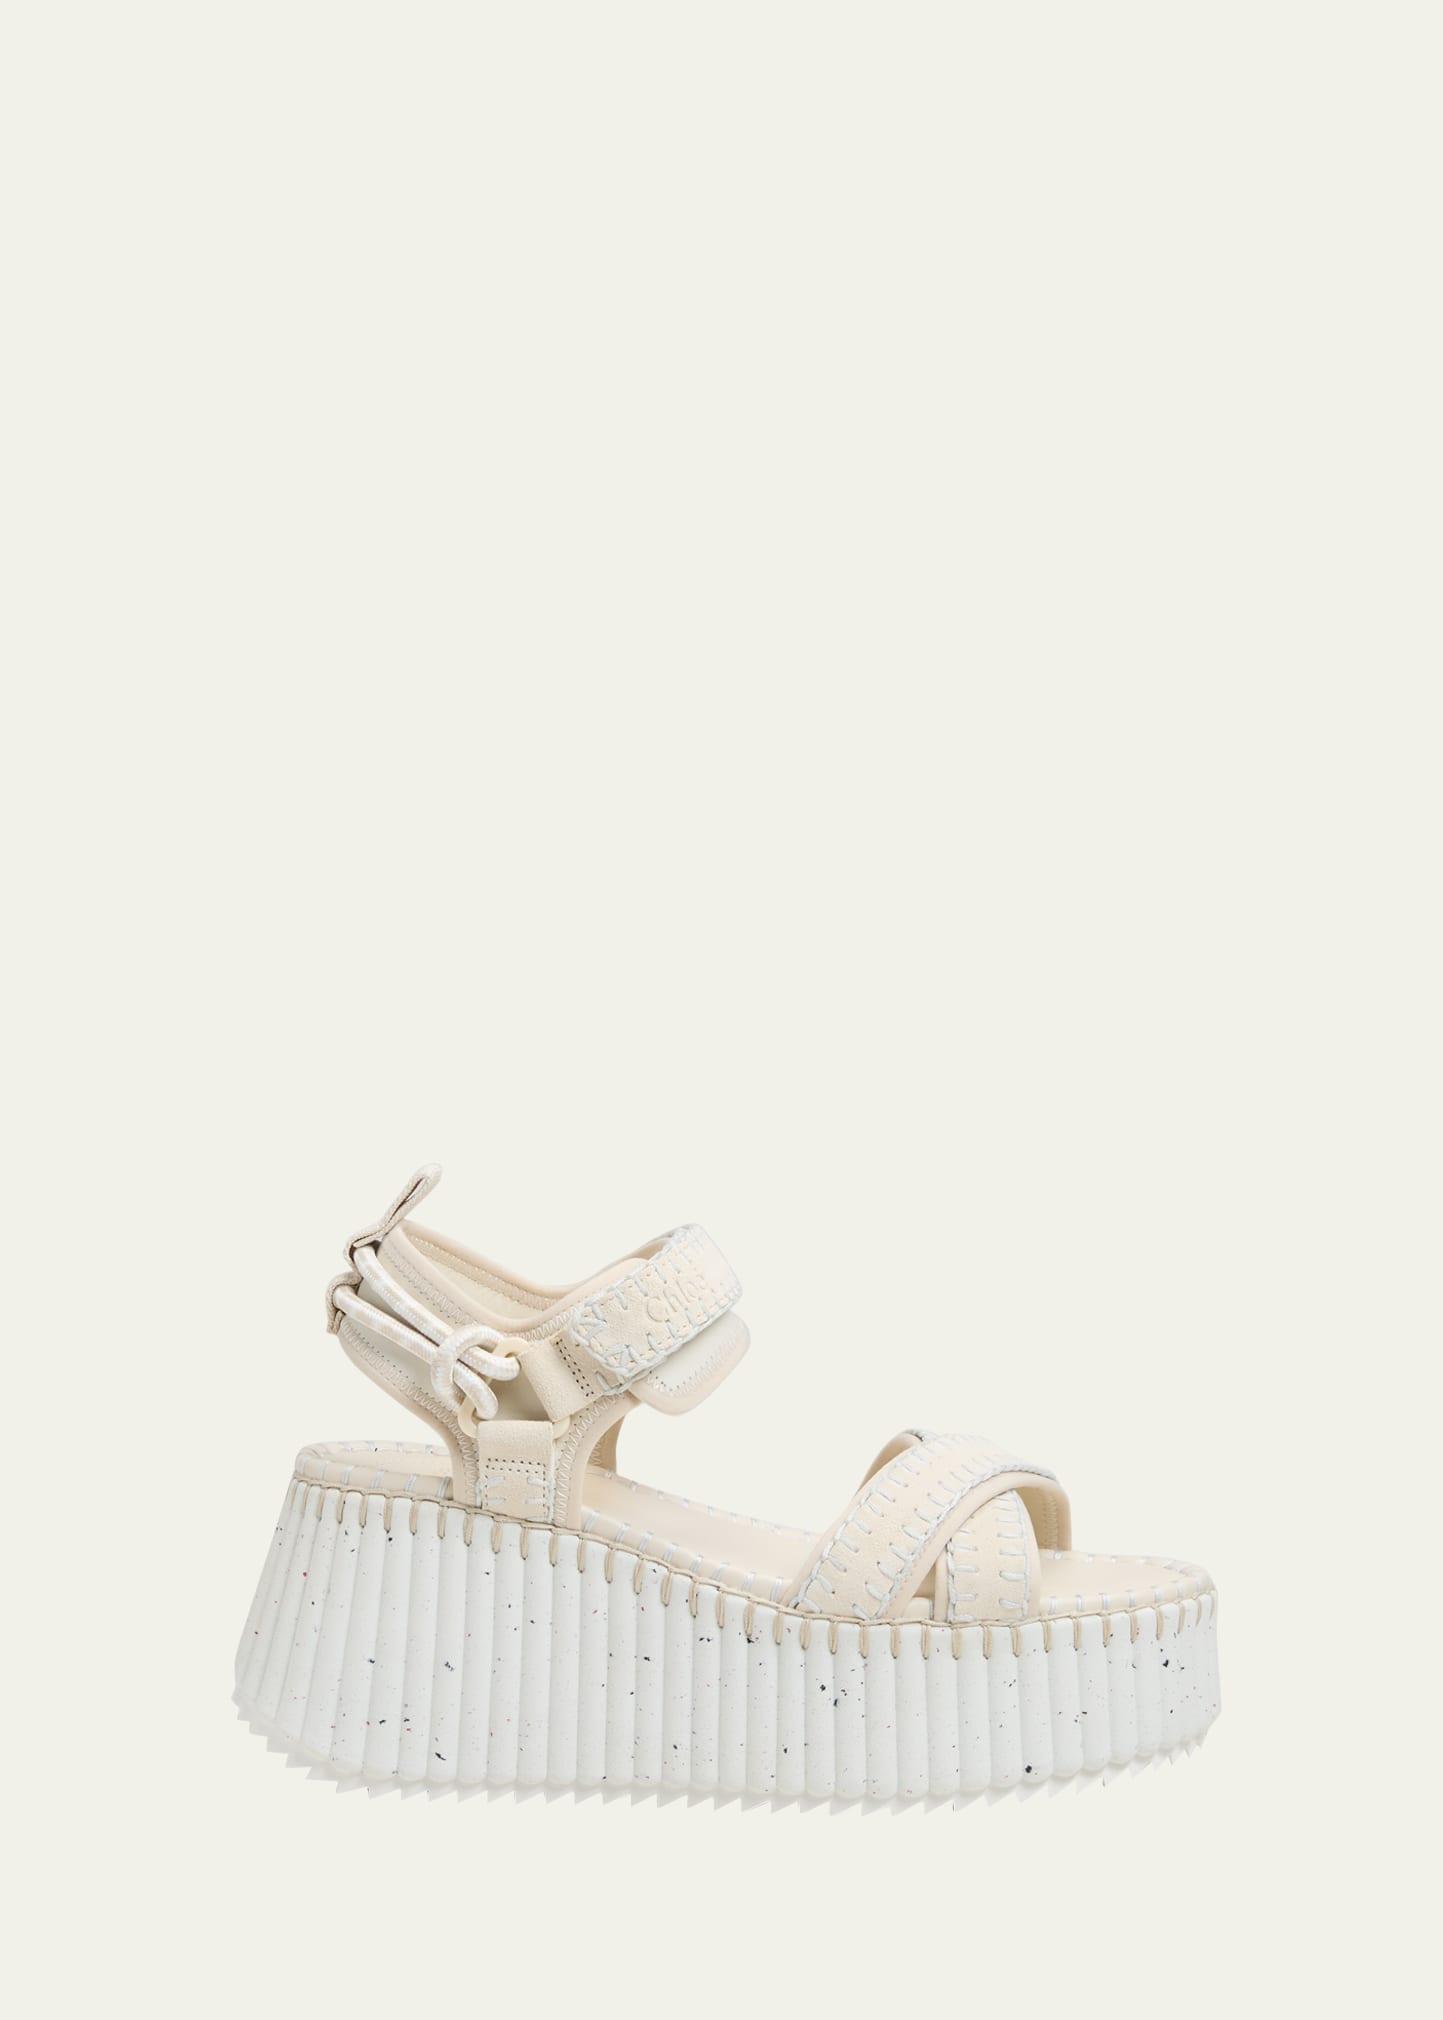 Chloe Womens Nama Platform Wedge Sandals Product Image